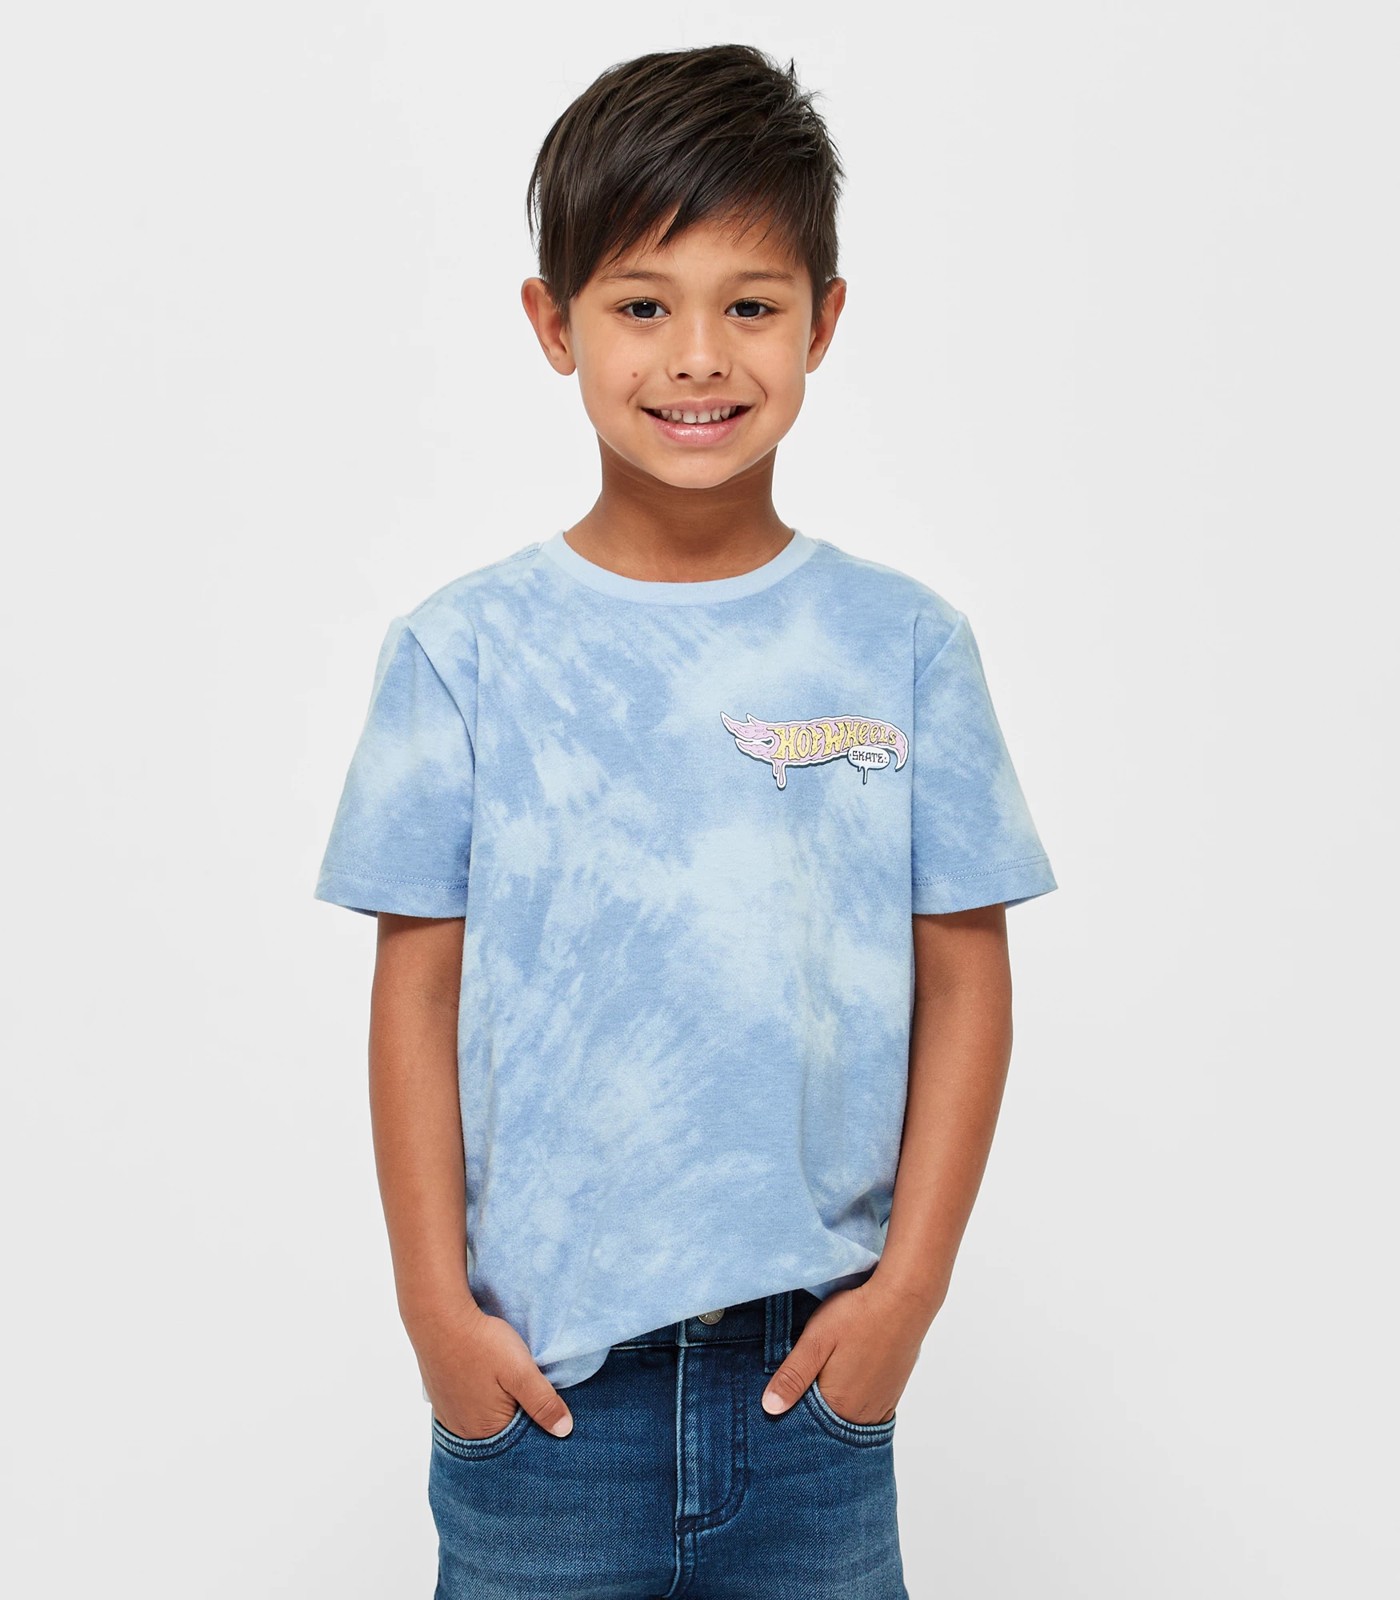 Hot Wheels Tie-Dye T-shirt | Target Australia